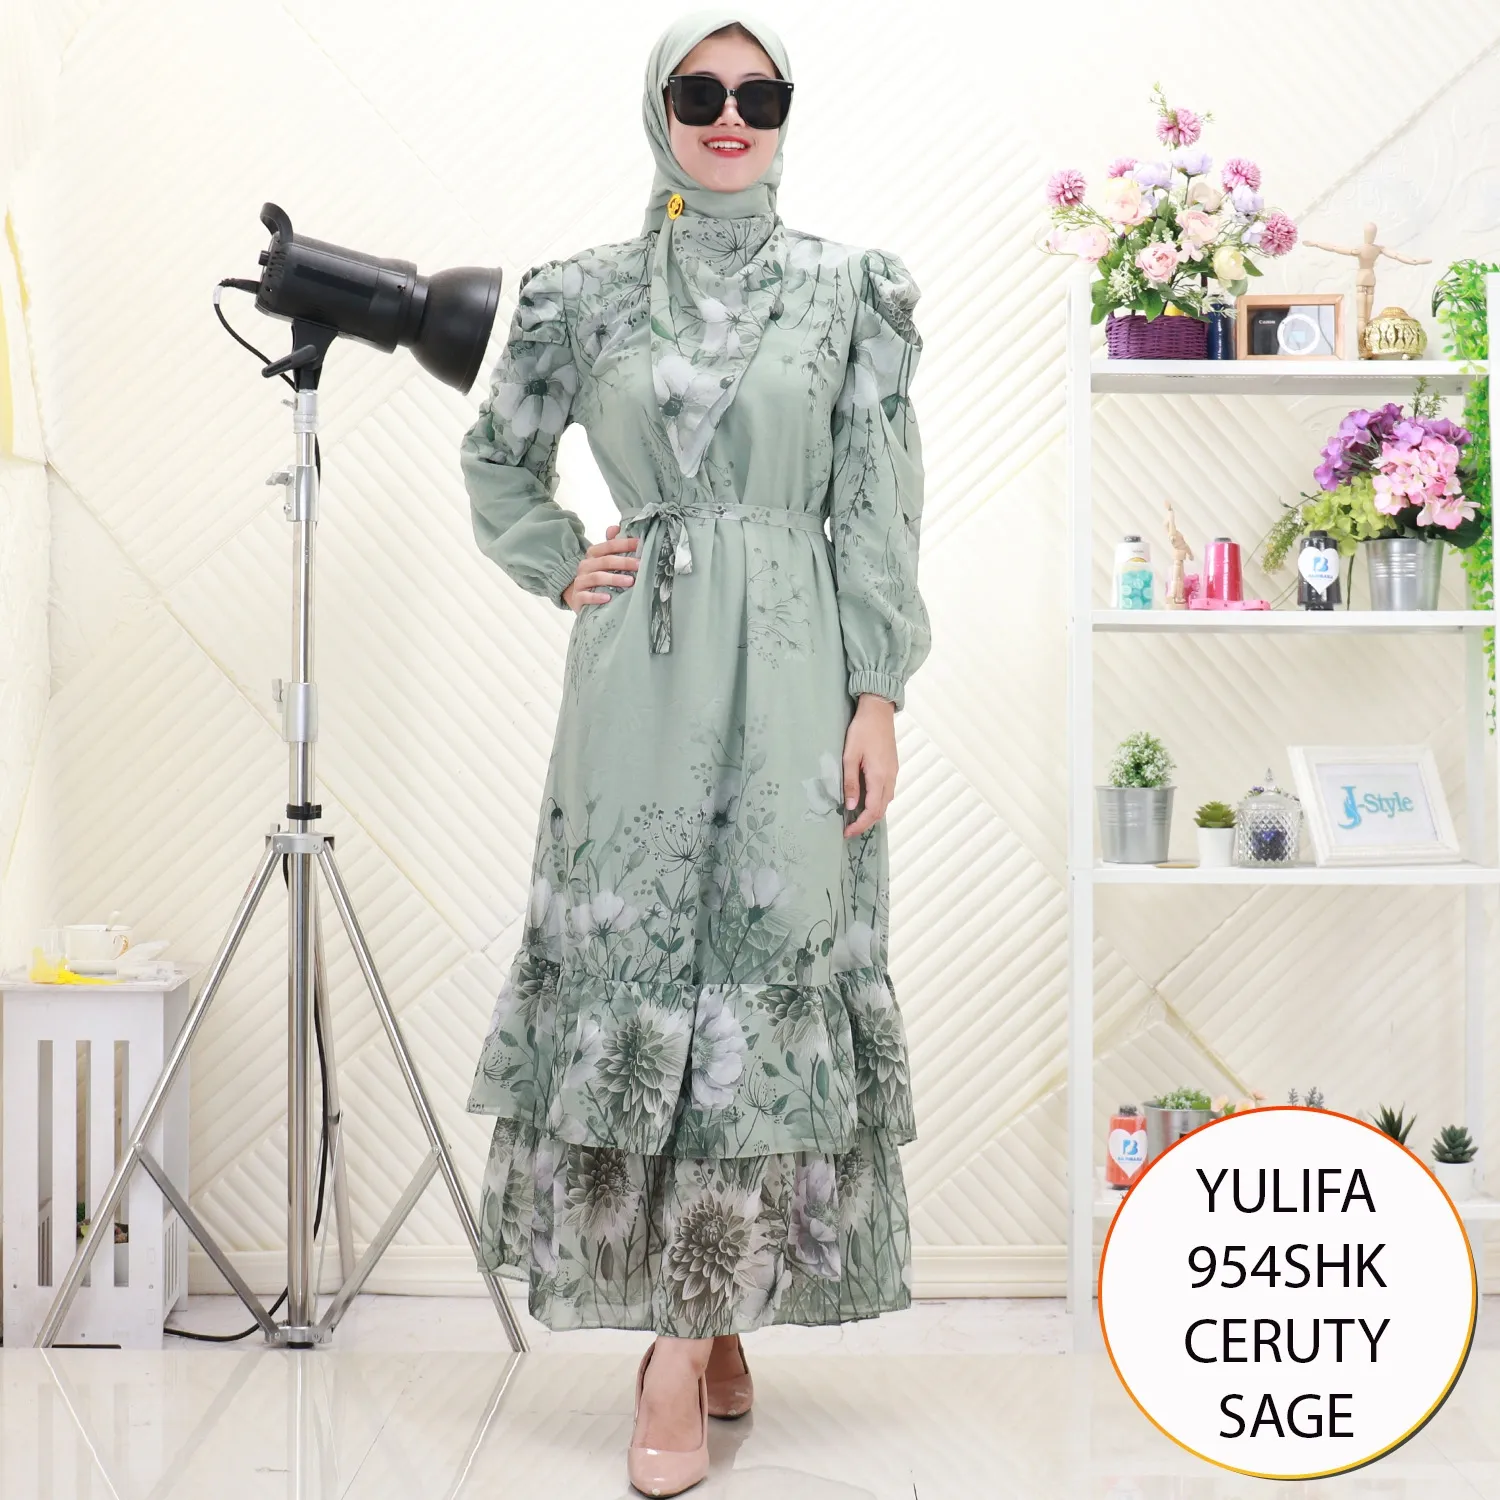 Yulifa Gamis Set Hijab Ceruty Motif Printing Busui Friendly Umpak Susun Bawah 954SHK ceruty - bajubaru.id, Belanja Online di bajubaru.id saja 